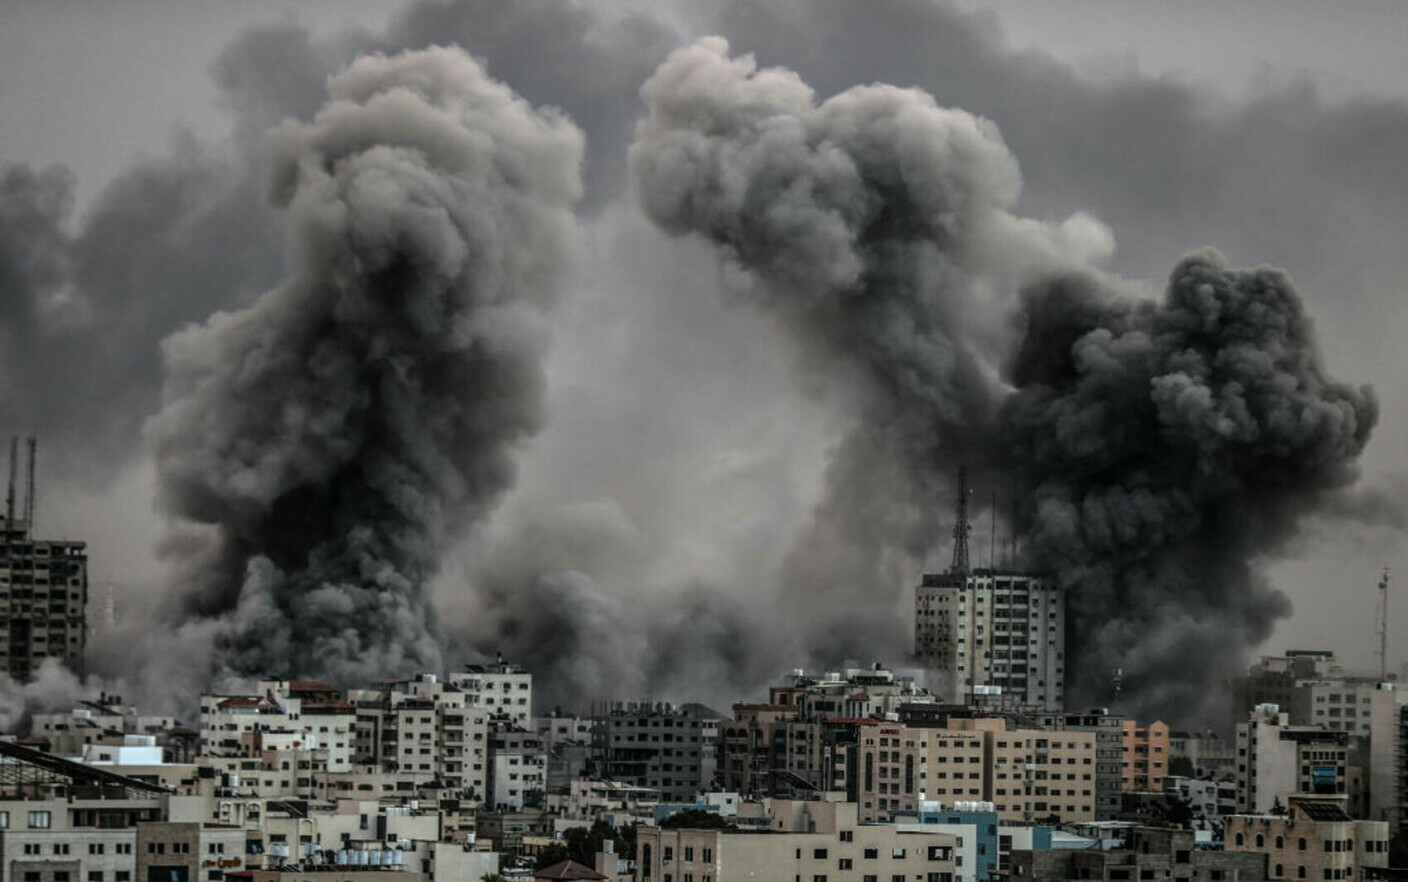 atac israel, fasia gaza